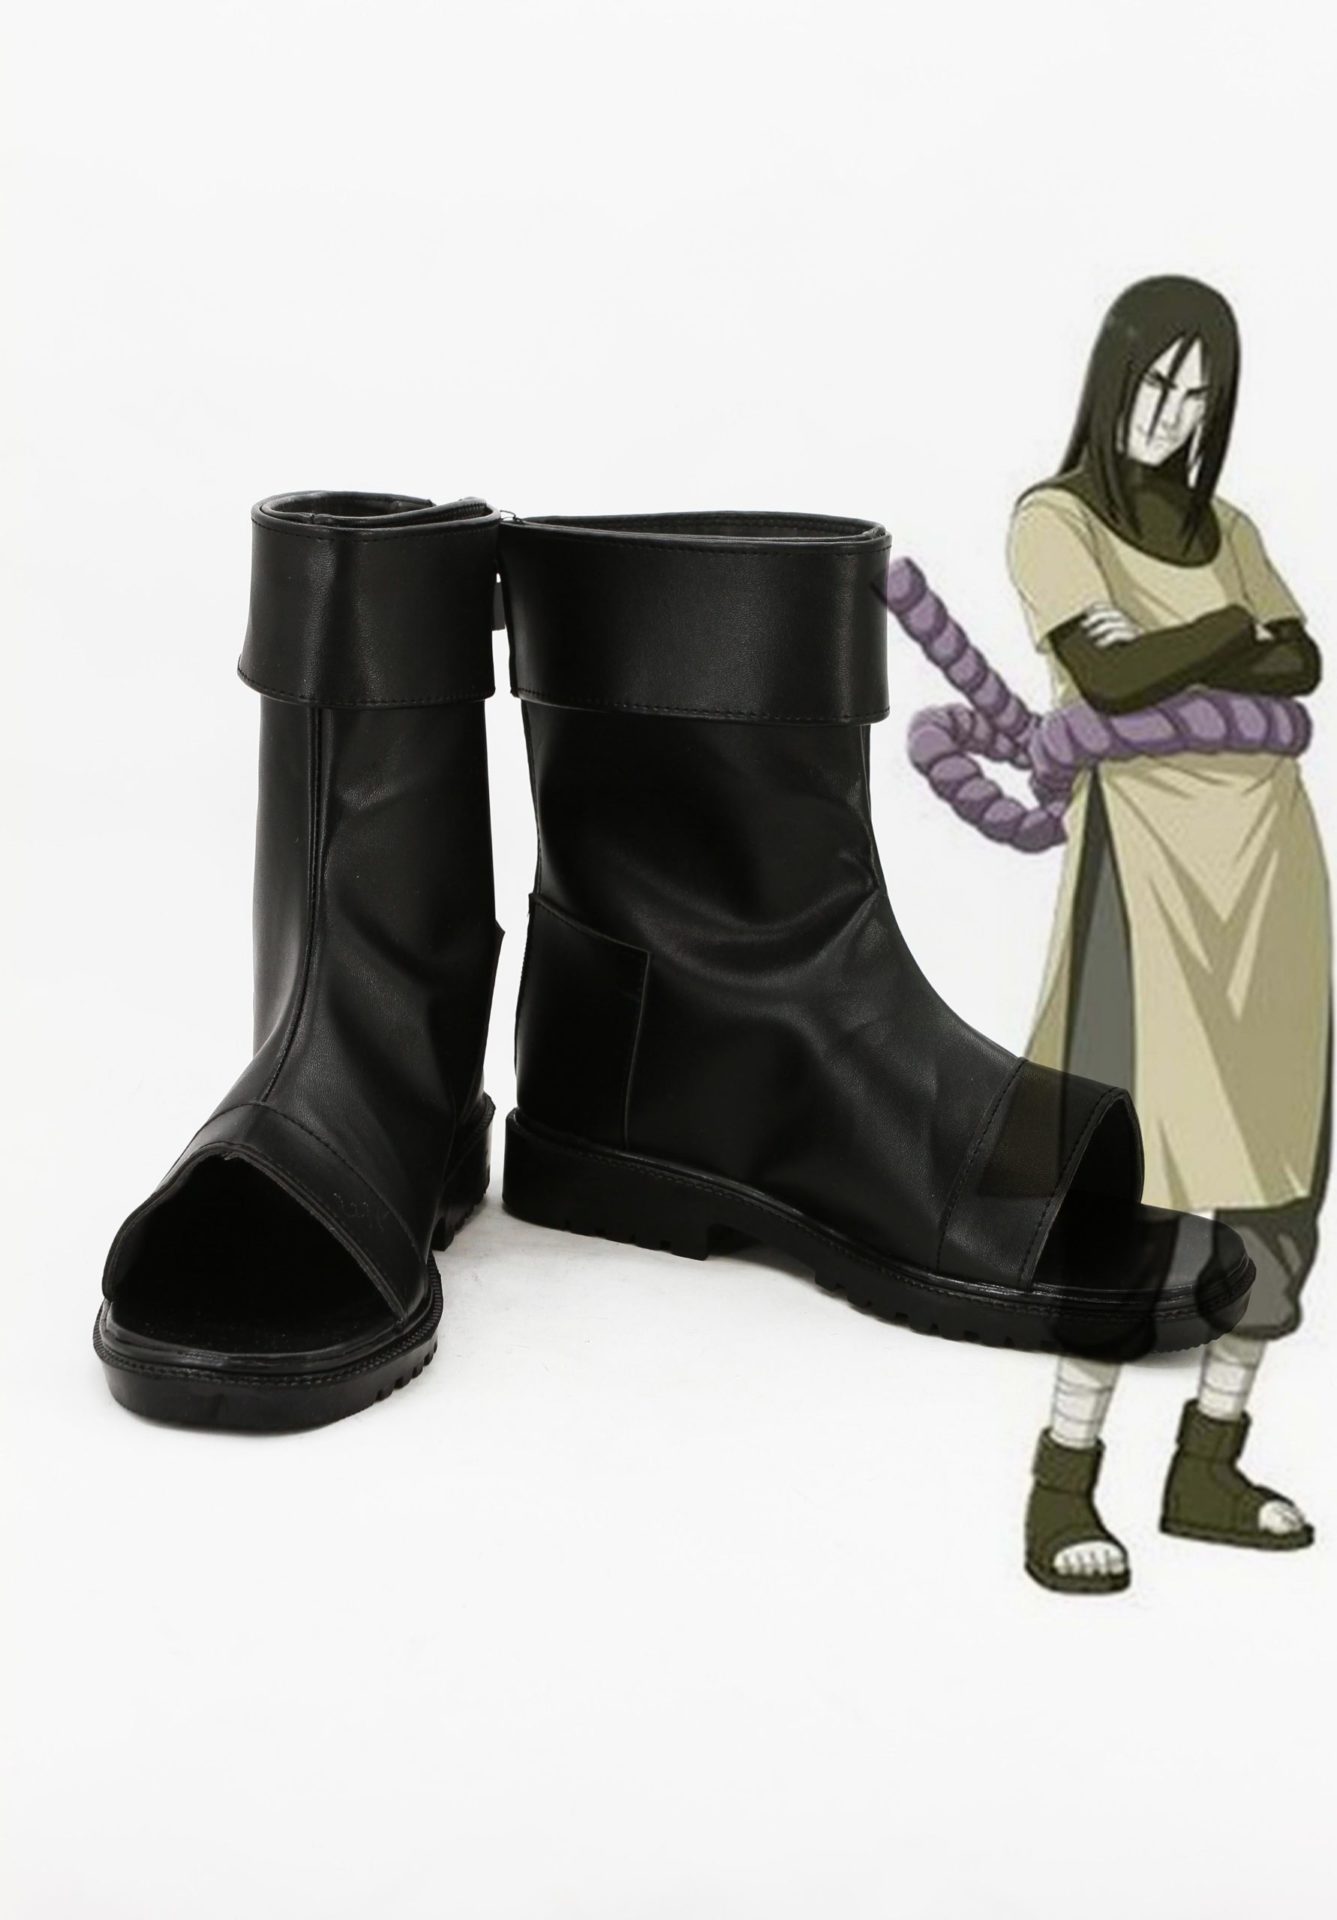 Naruto Orochimaru Botte Cosplay Chaussures